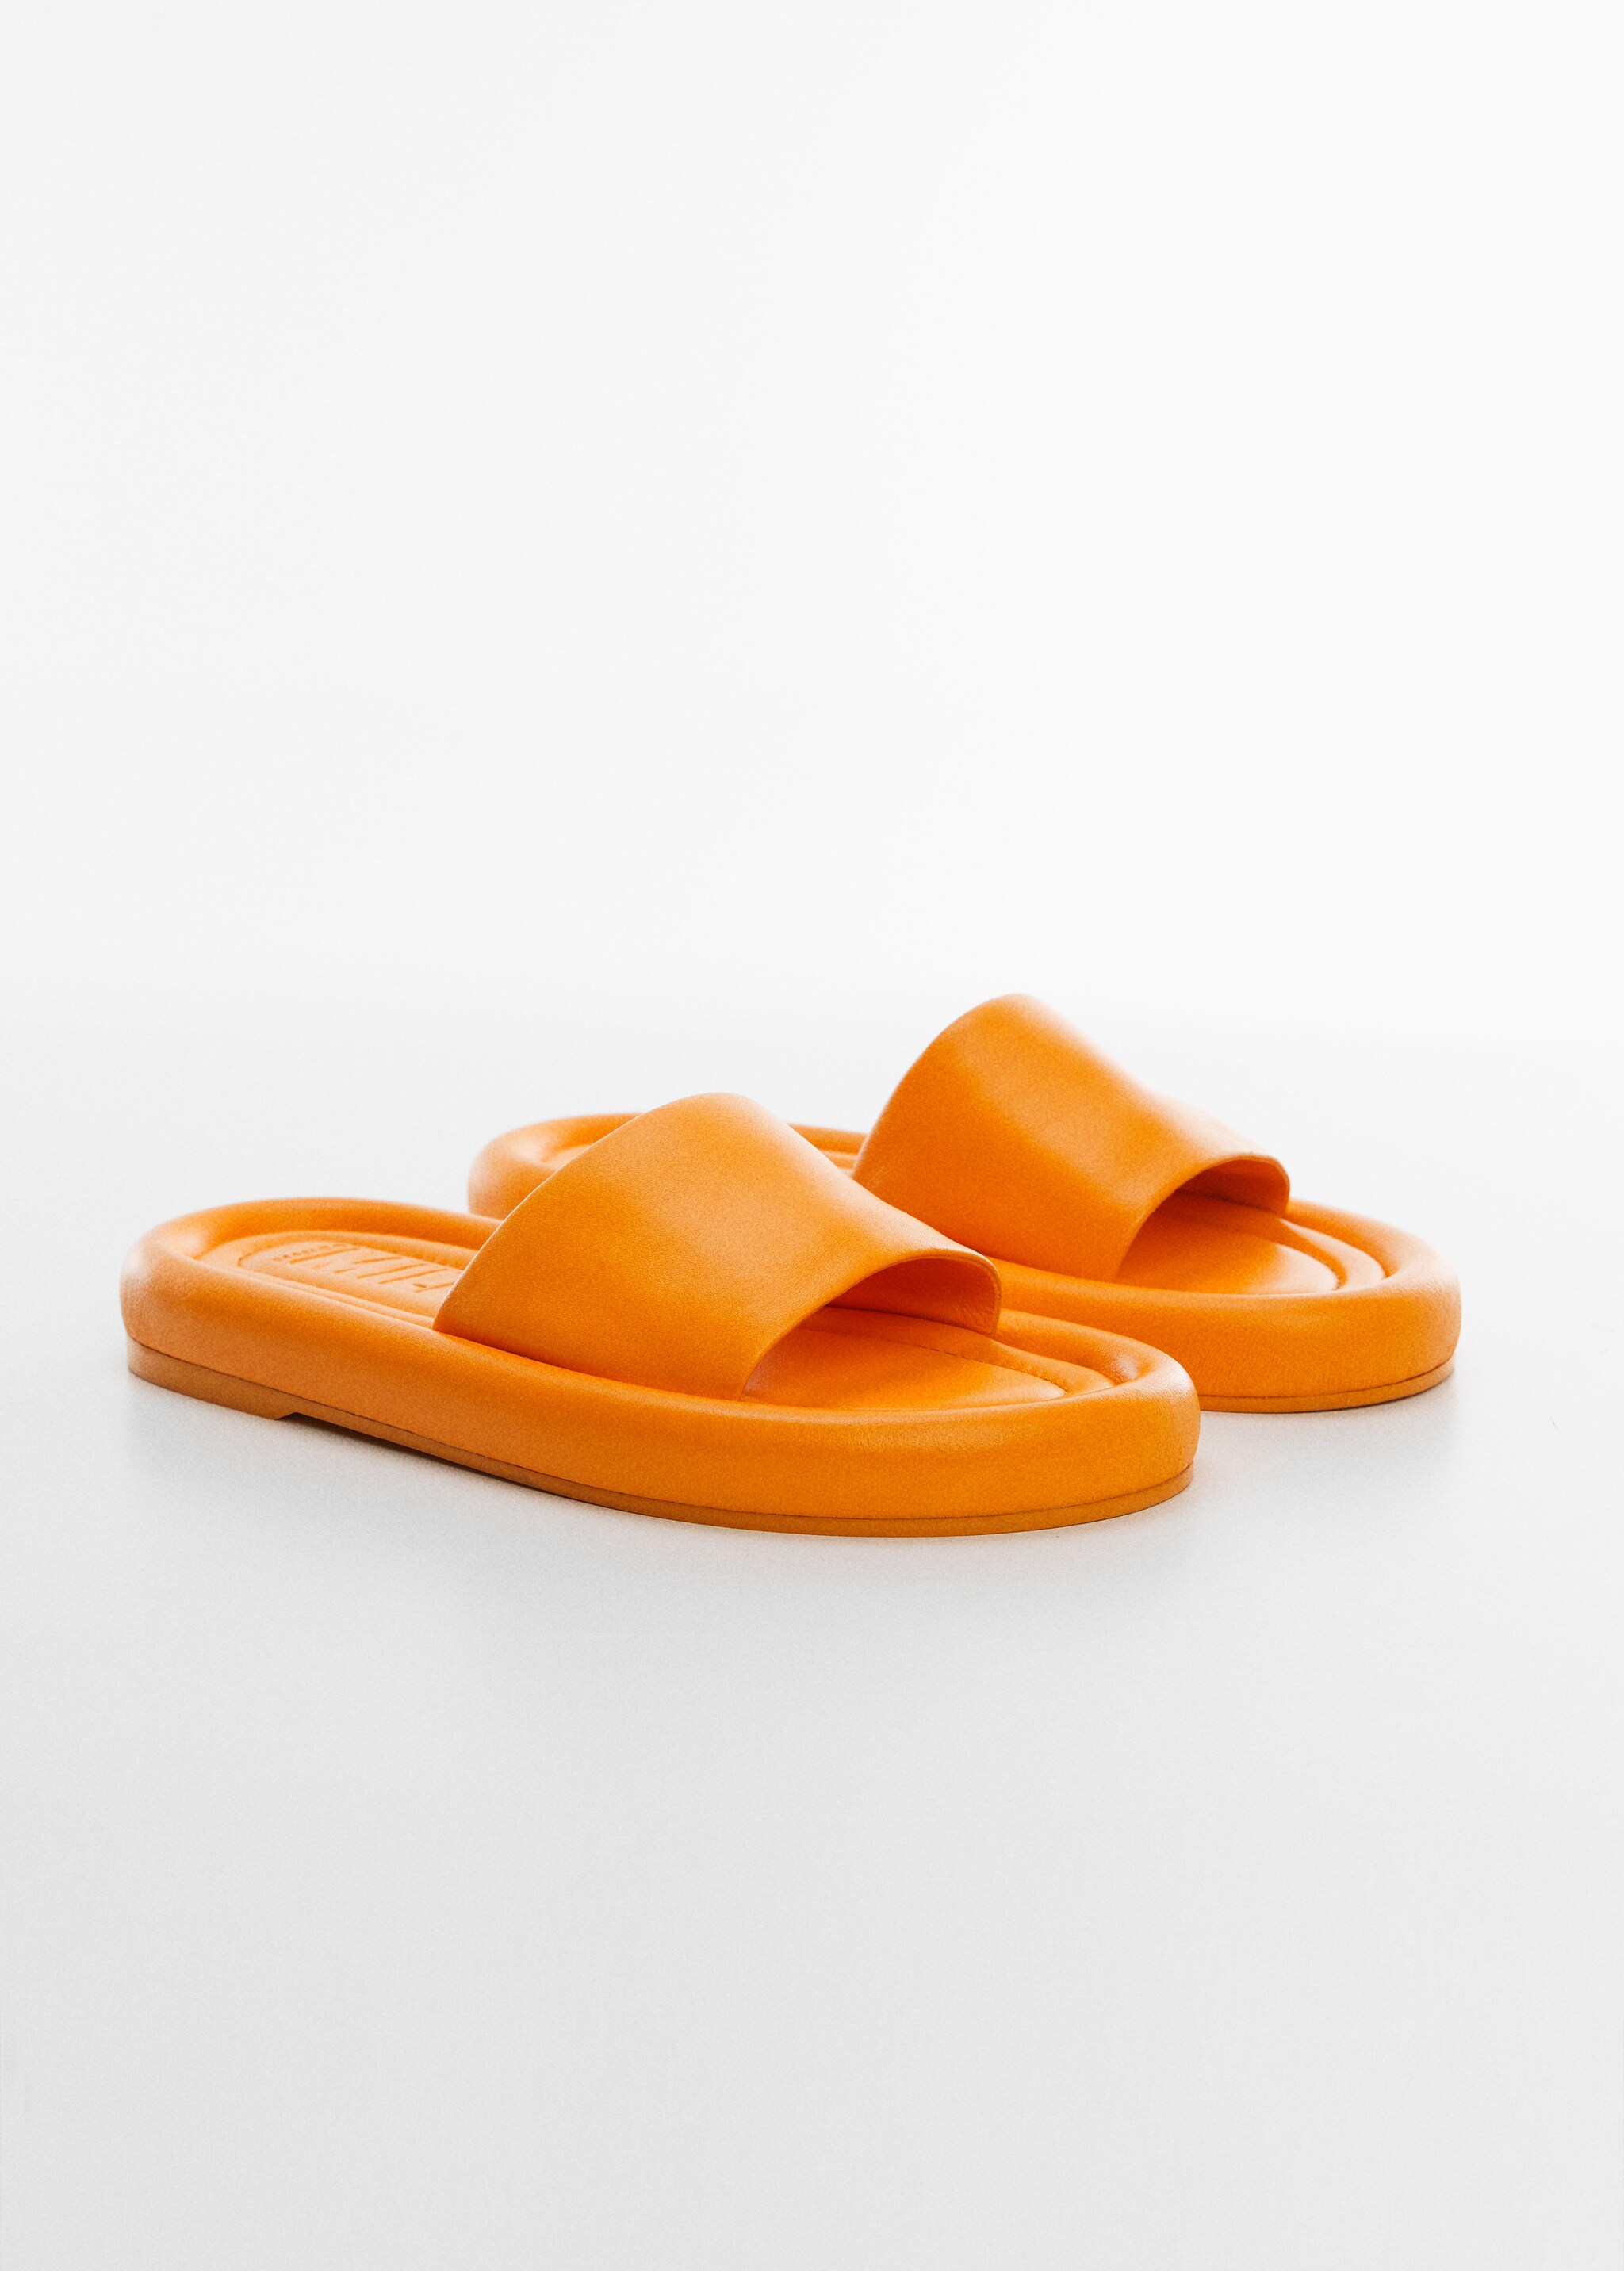 Leather thong sandals - Medium plane